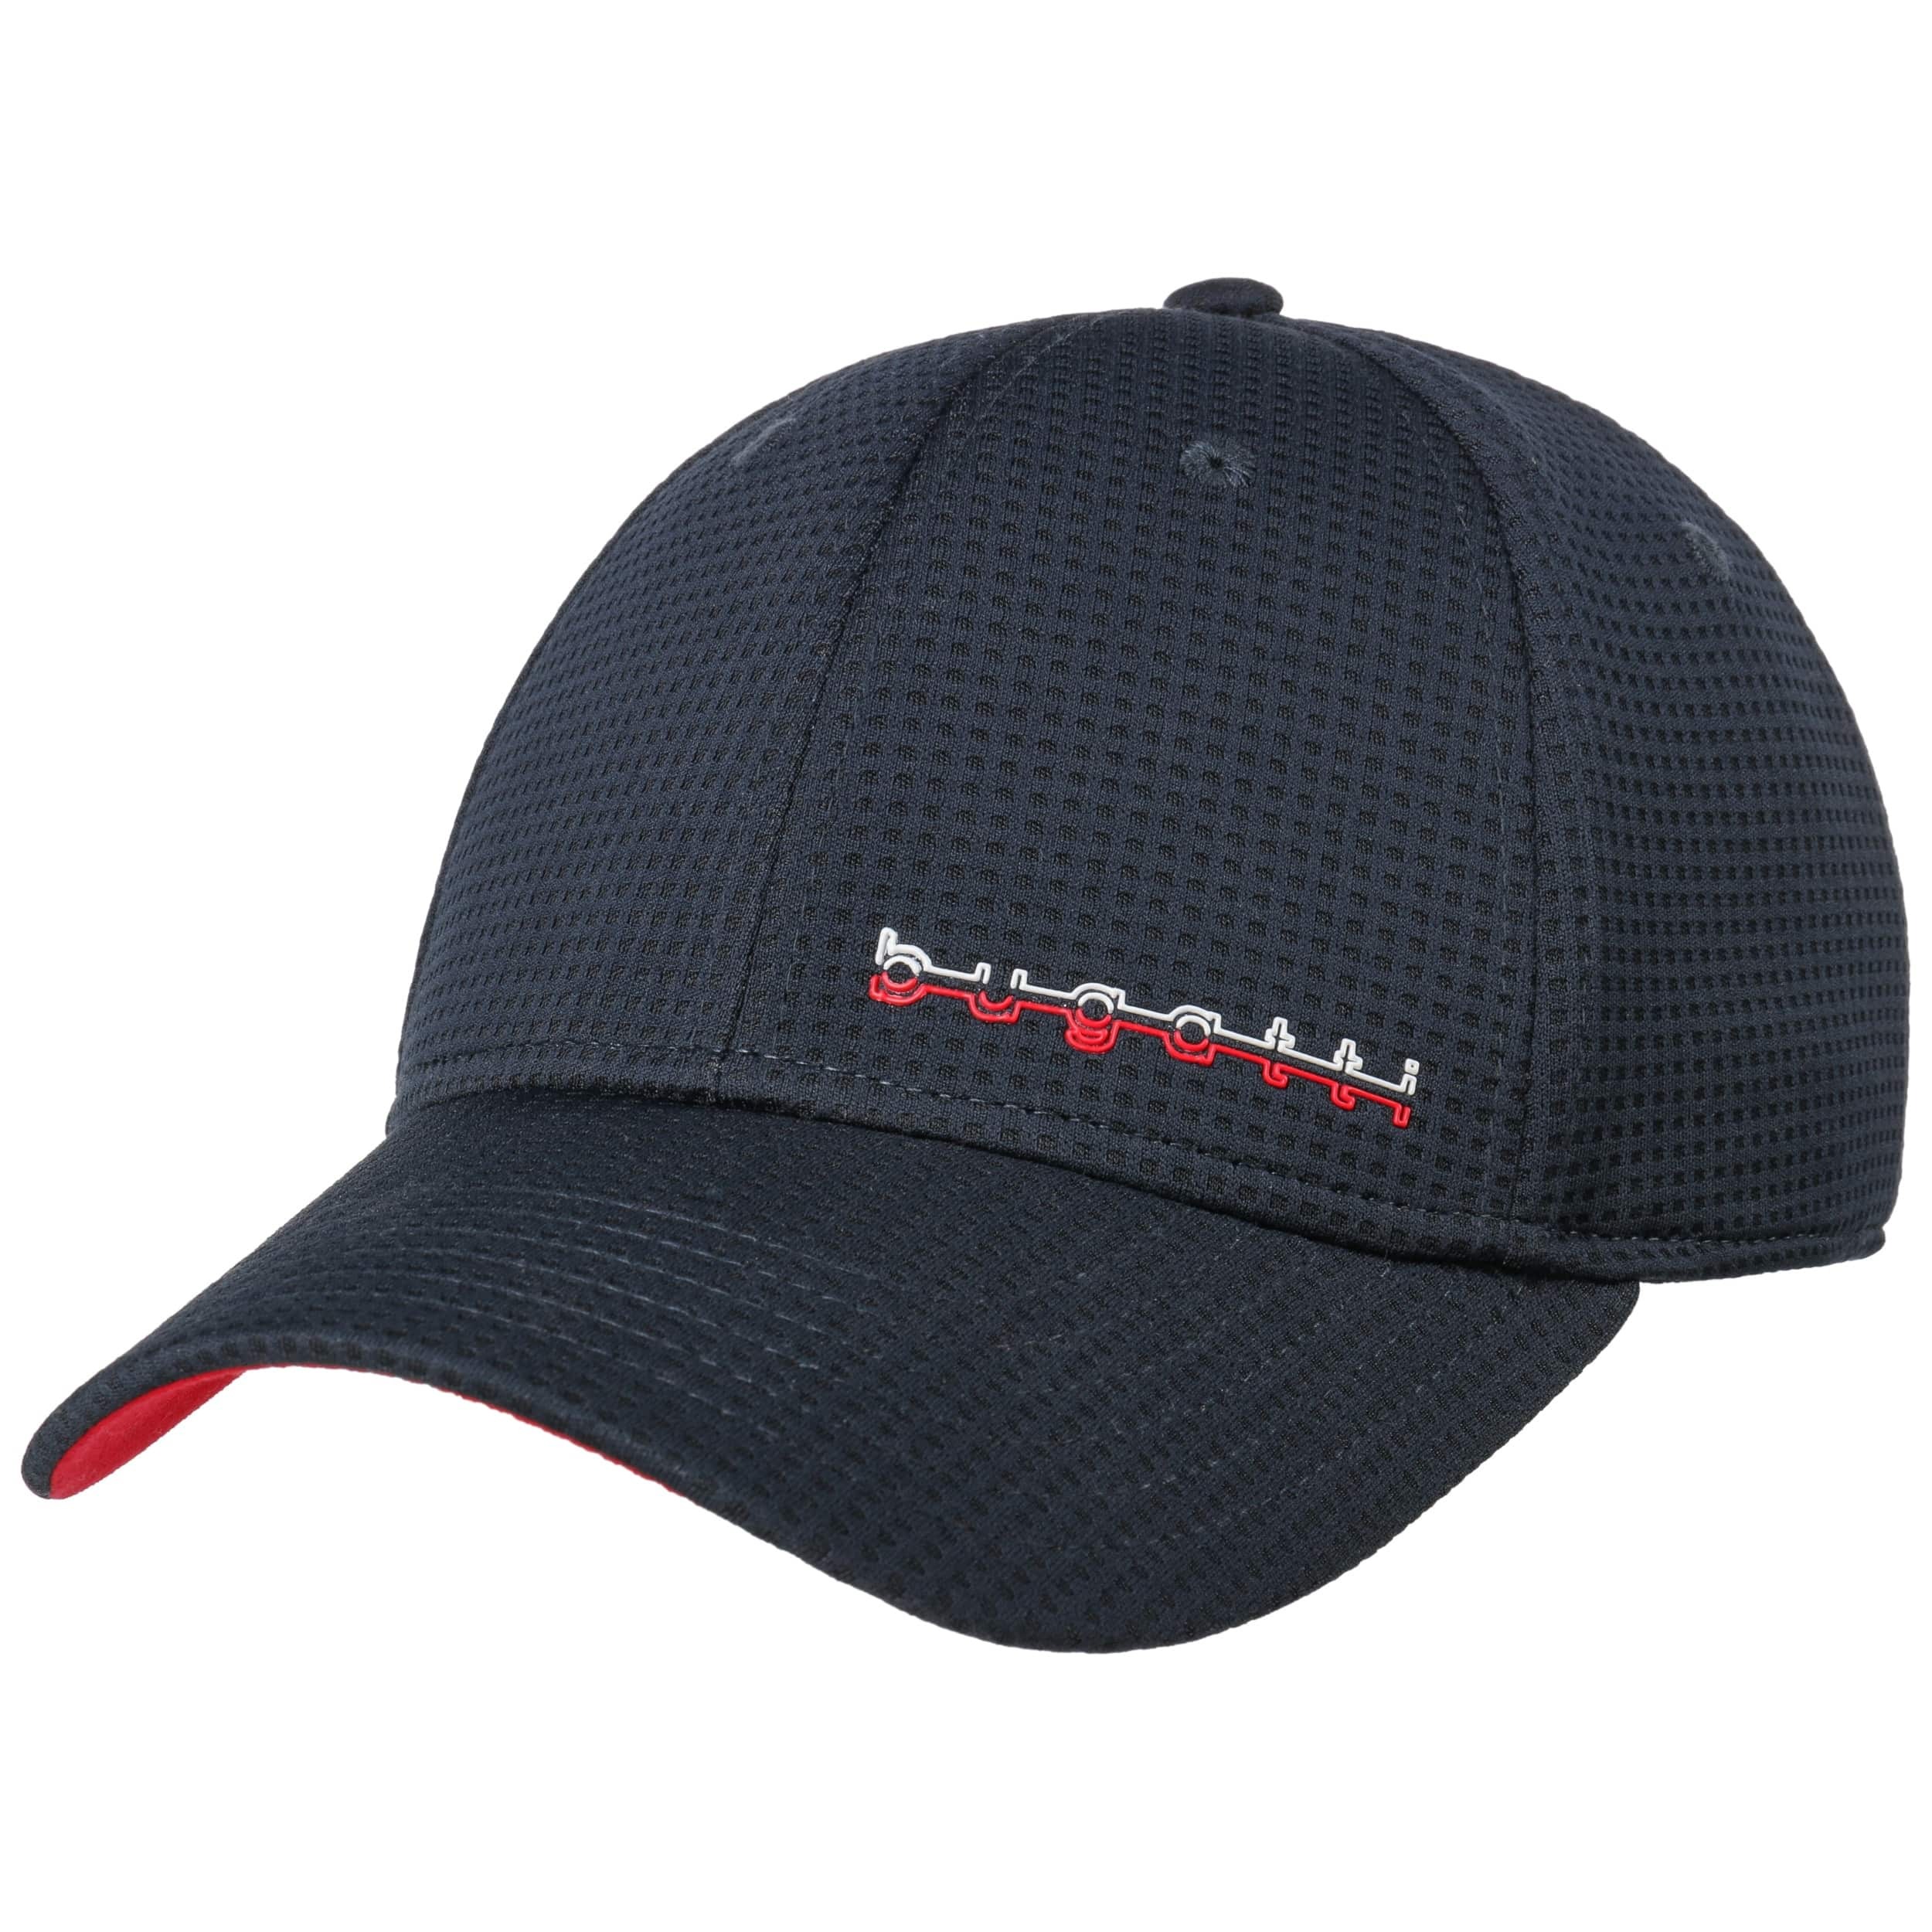 Greys Strata Baseball Caps 4 Types Fishing Trout Salmon Game Peaked Headwear 